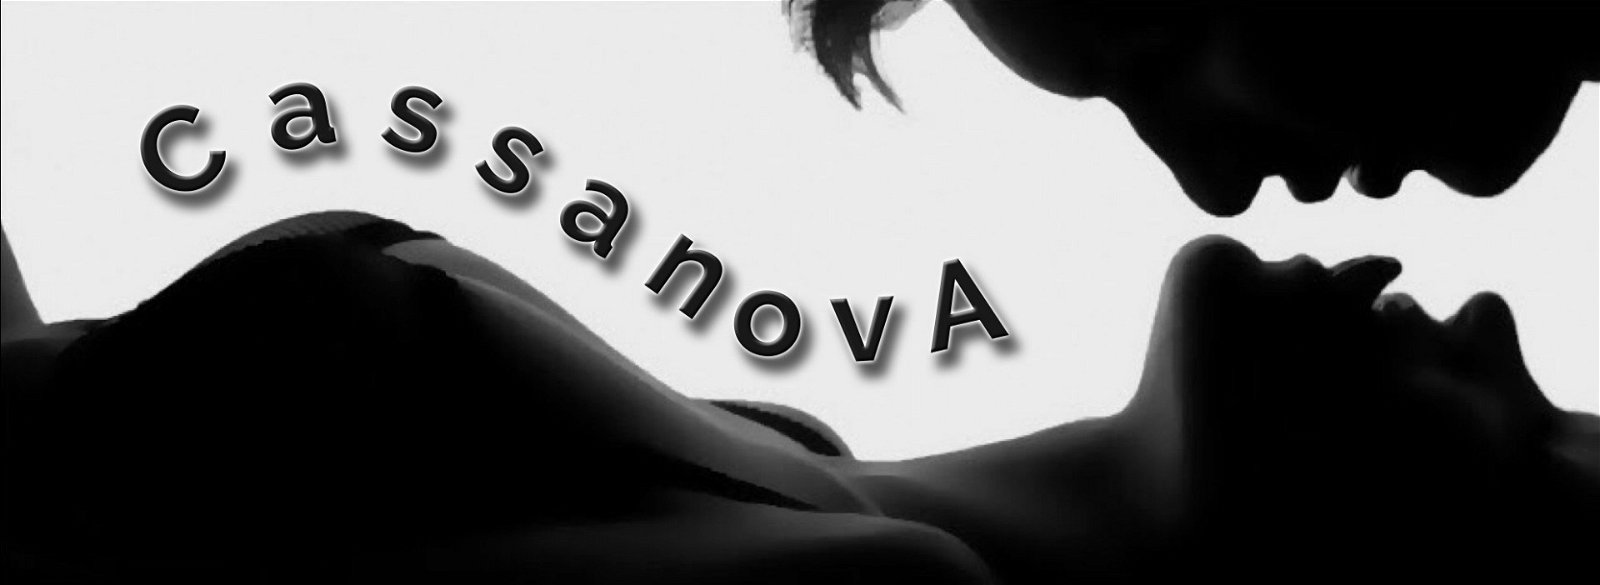 Cover photo of CassanovA